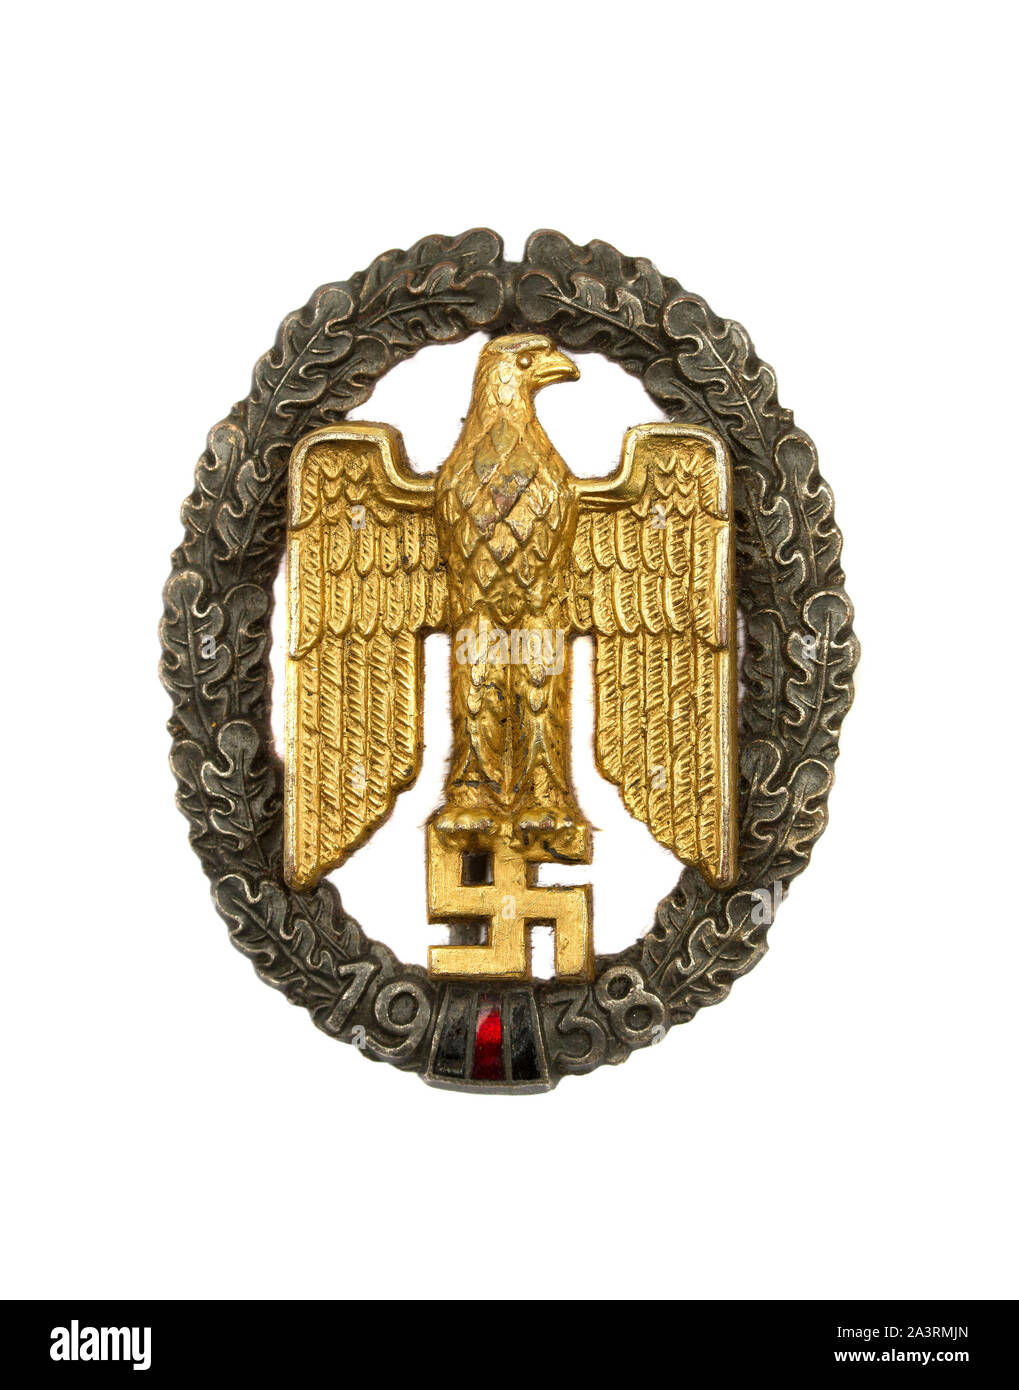 Seconda Guerra Mondiale tedesco GAU Sudetenland badge. 1938 Foto Stock